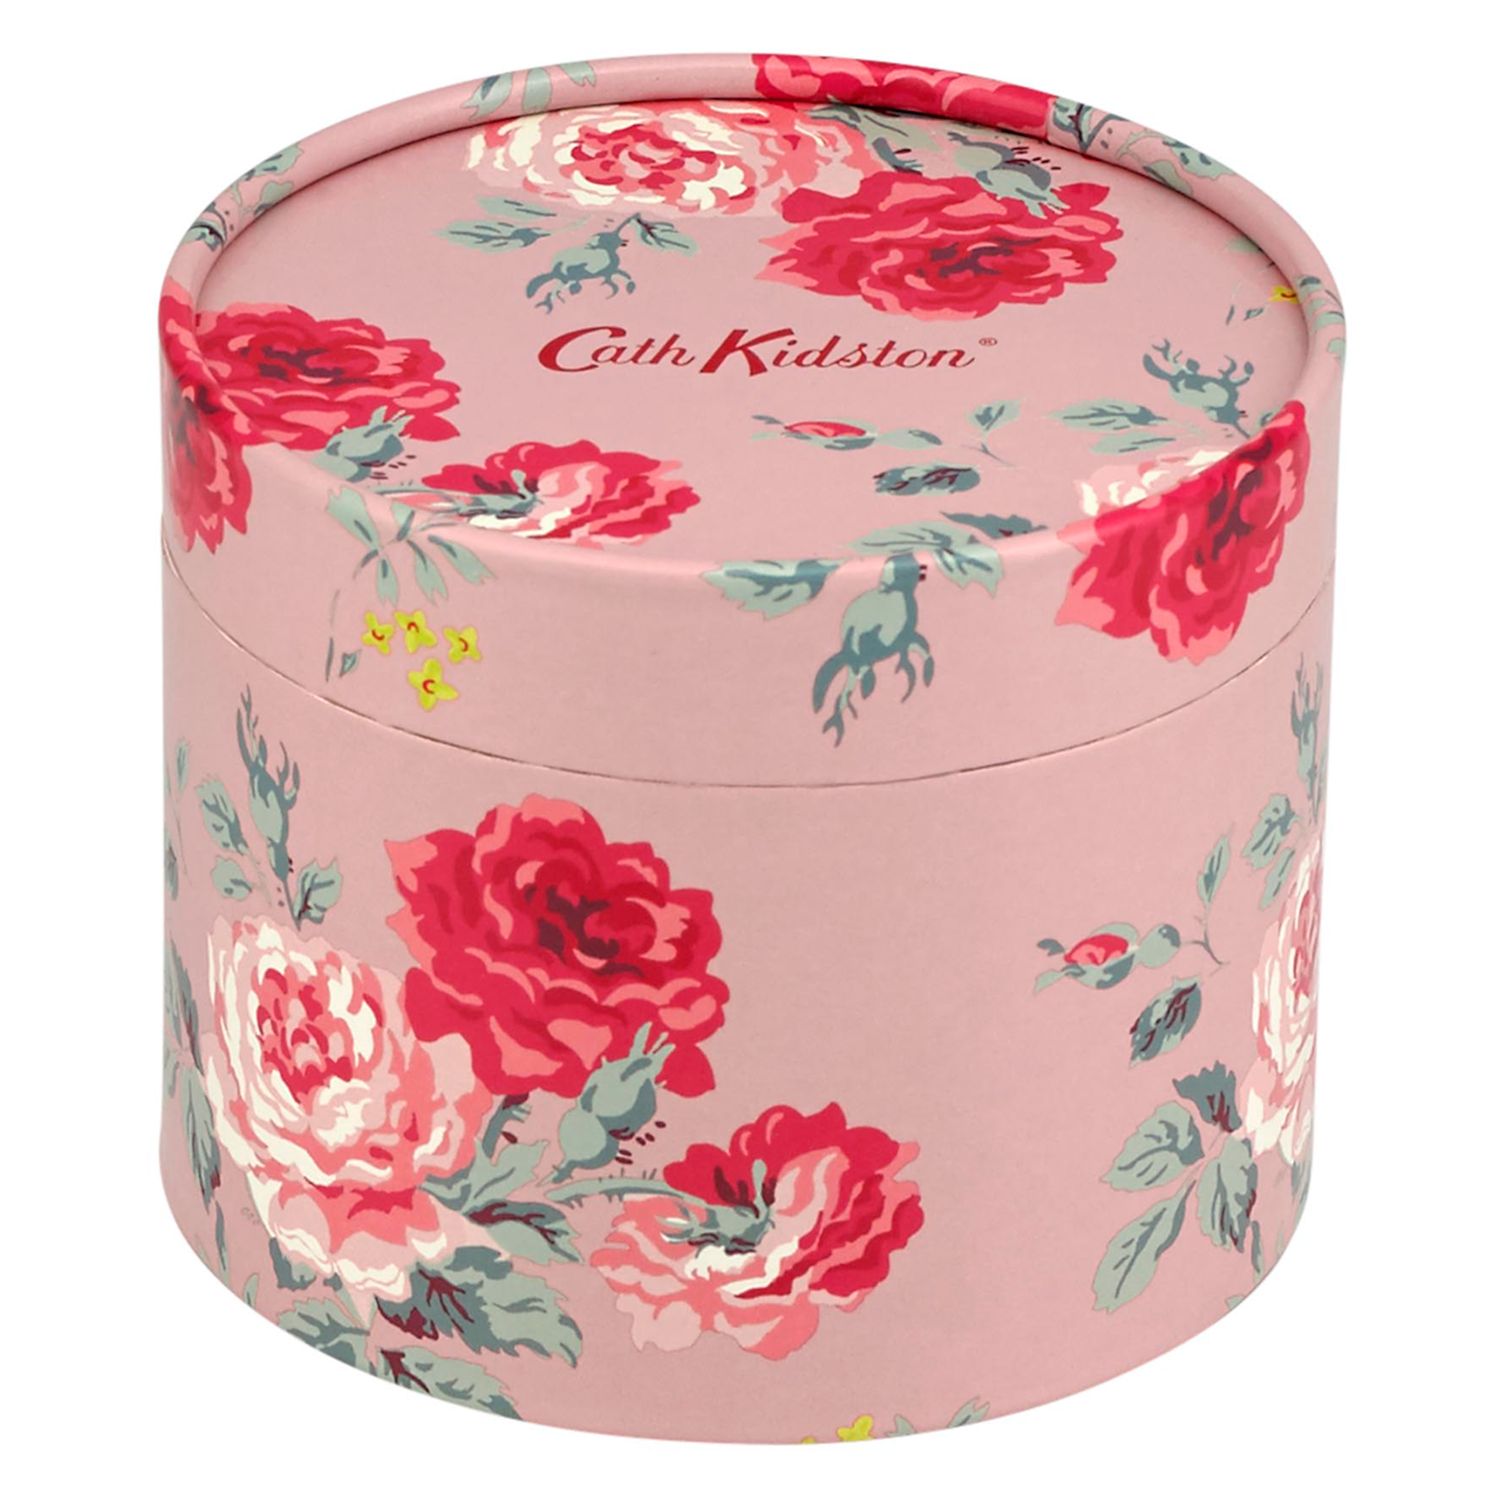 Cath Kidston Antique Rose Mug in Gift Box, Dusty Pink